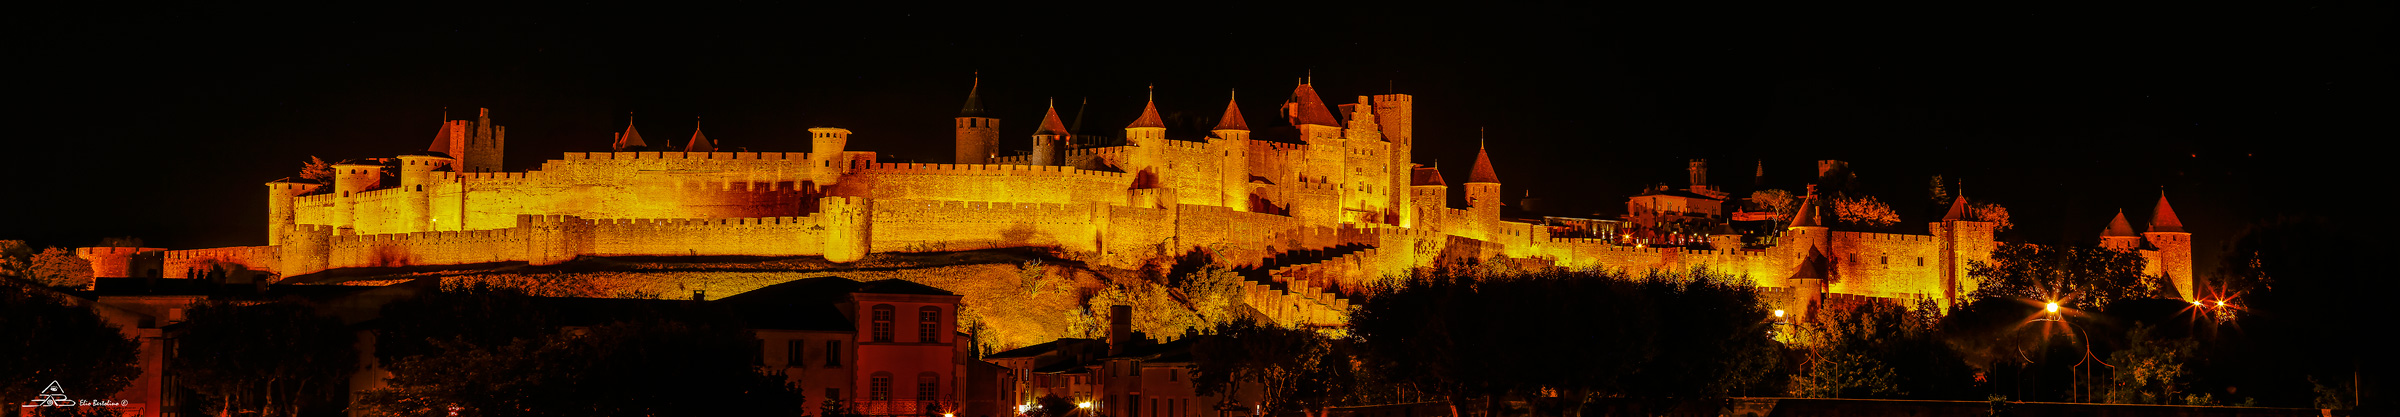 Carcassonne (fr)...